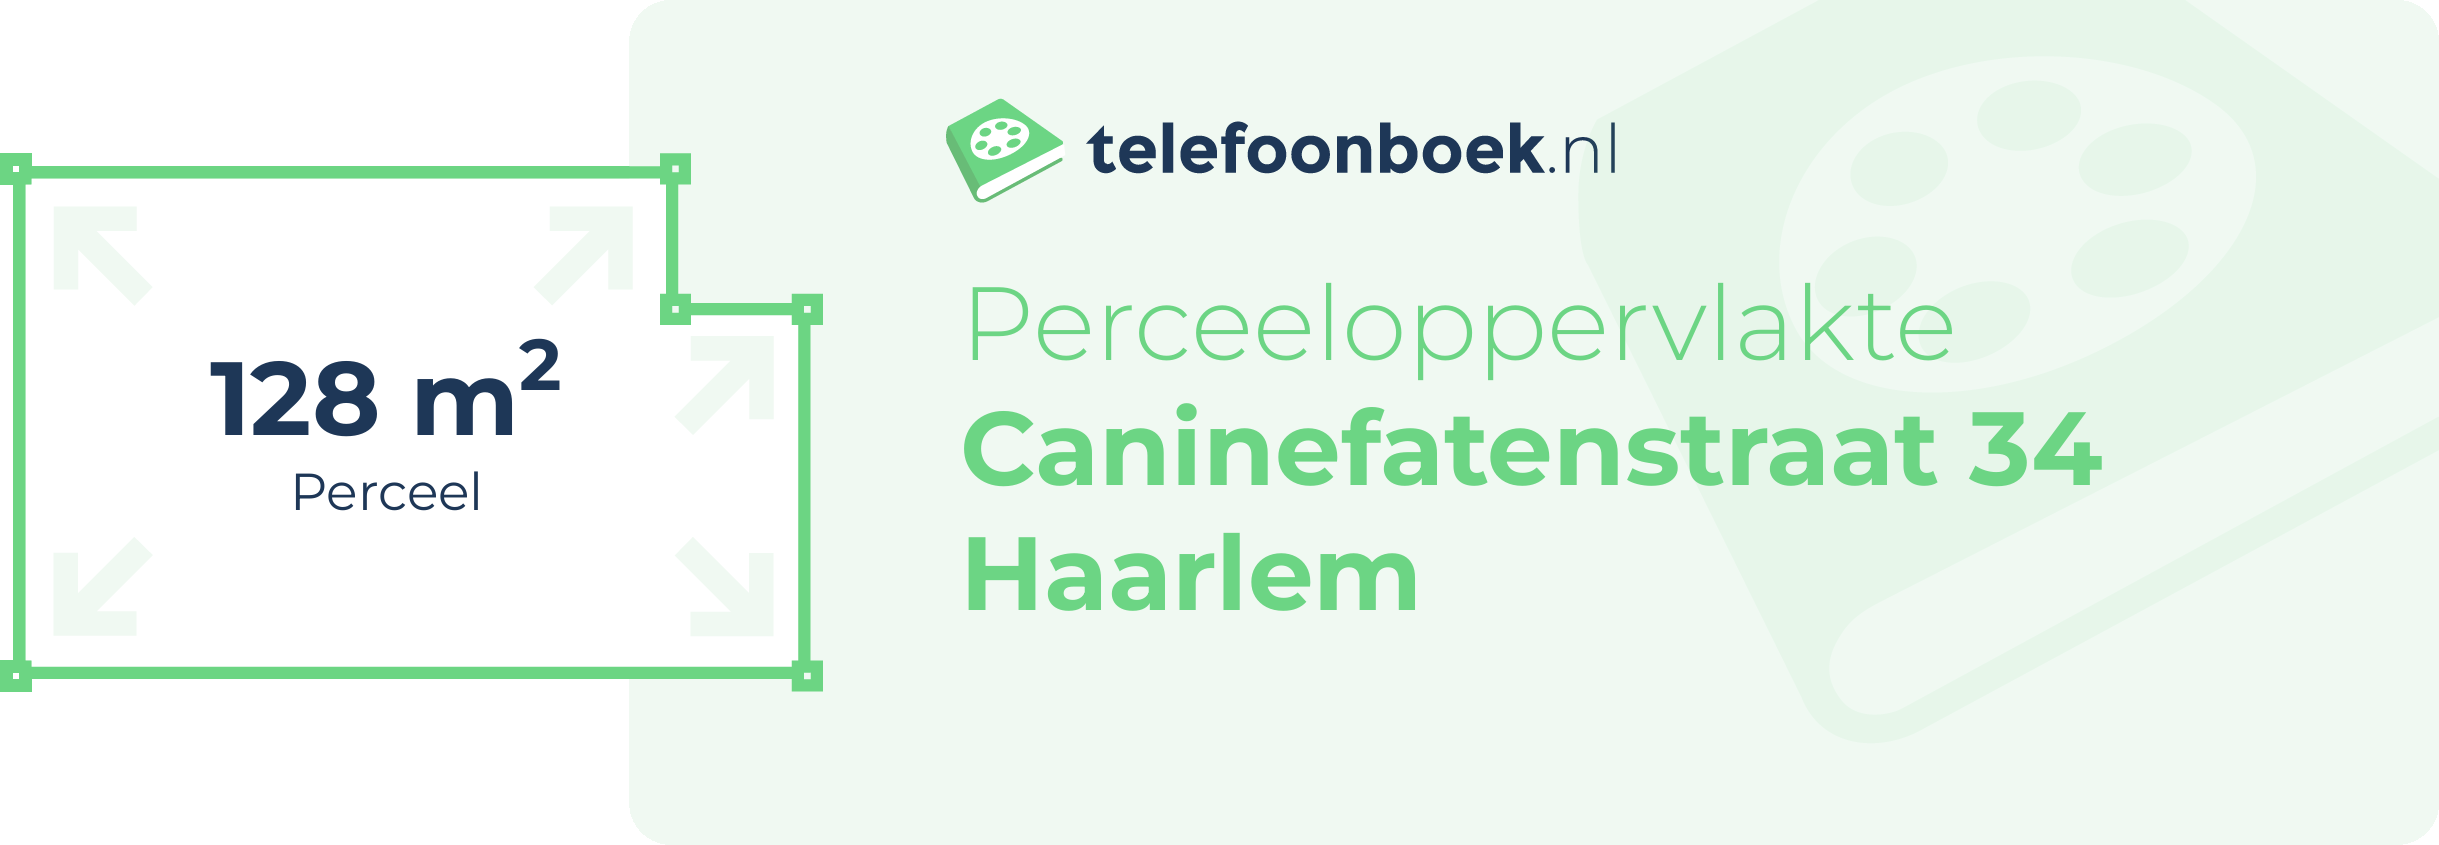 Perceeloppervlakte Caninefatenstraat 34 Haarlem